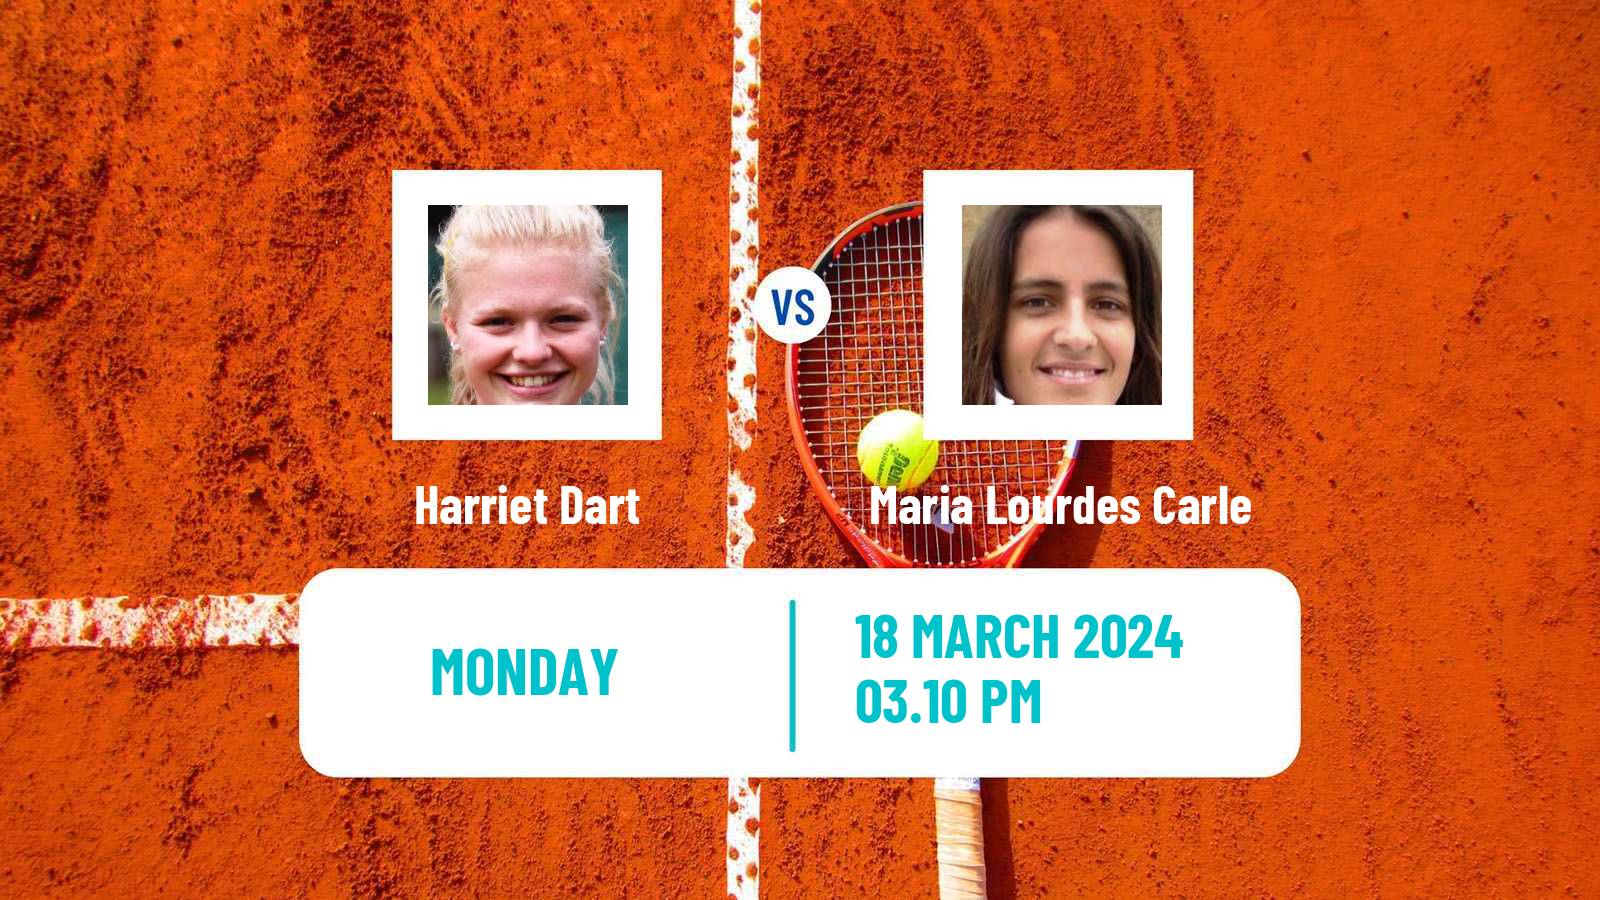 Tennis WTA Miami Harriet Dart - Maria Lourdes Carle